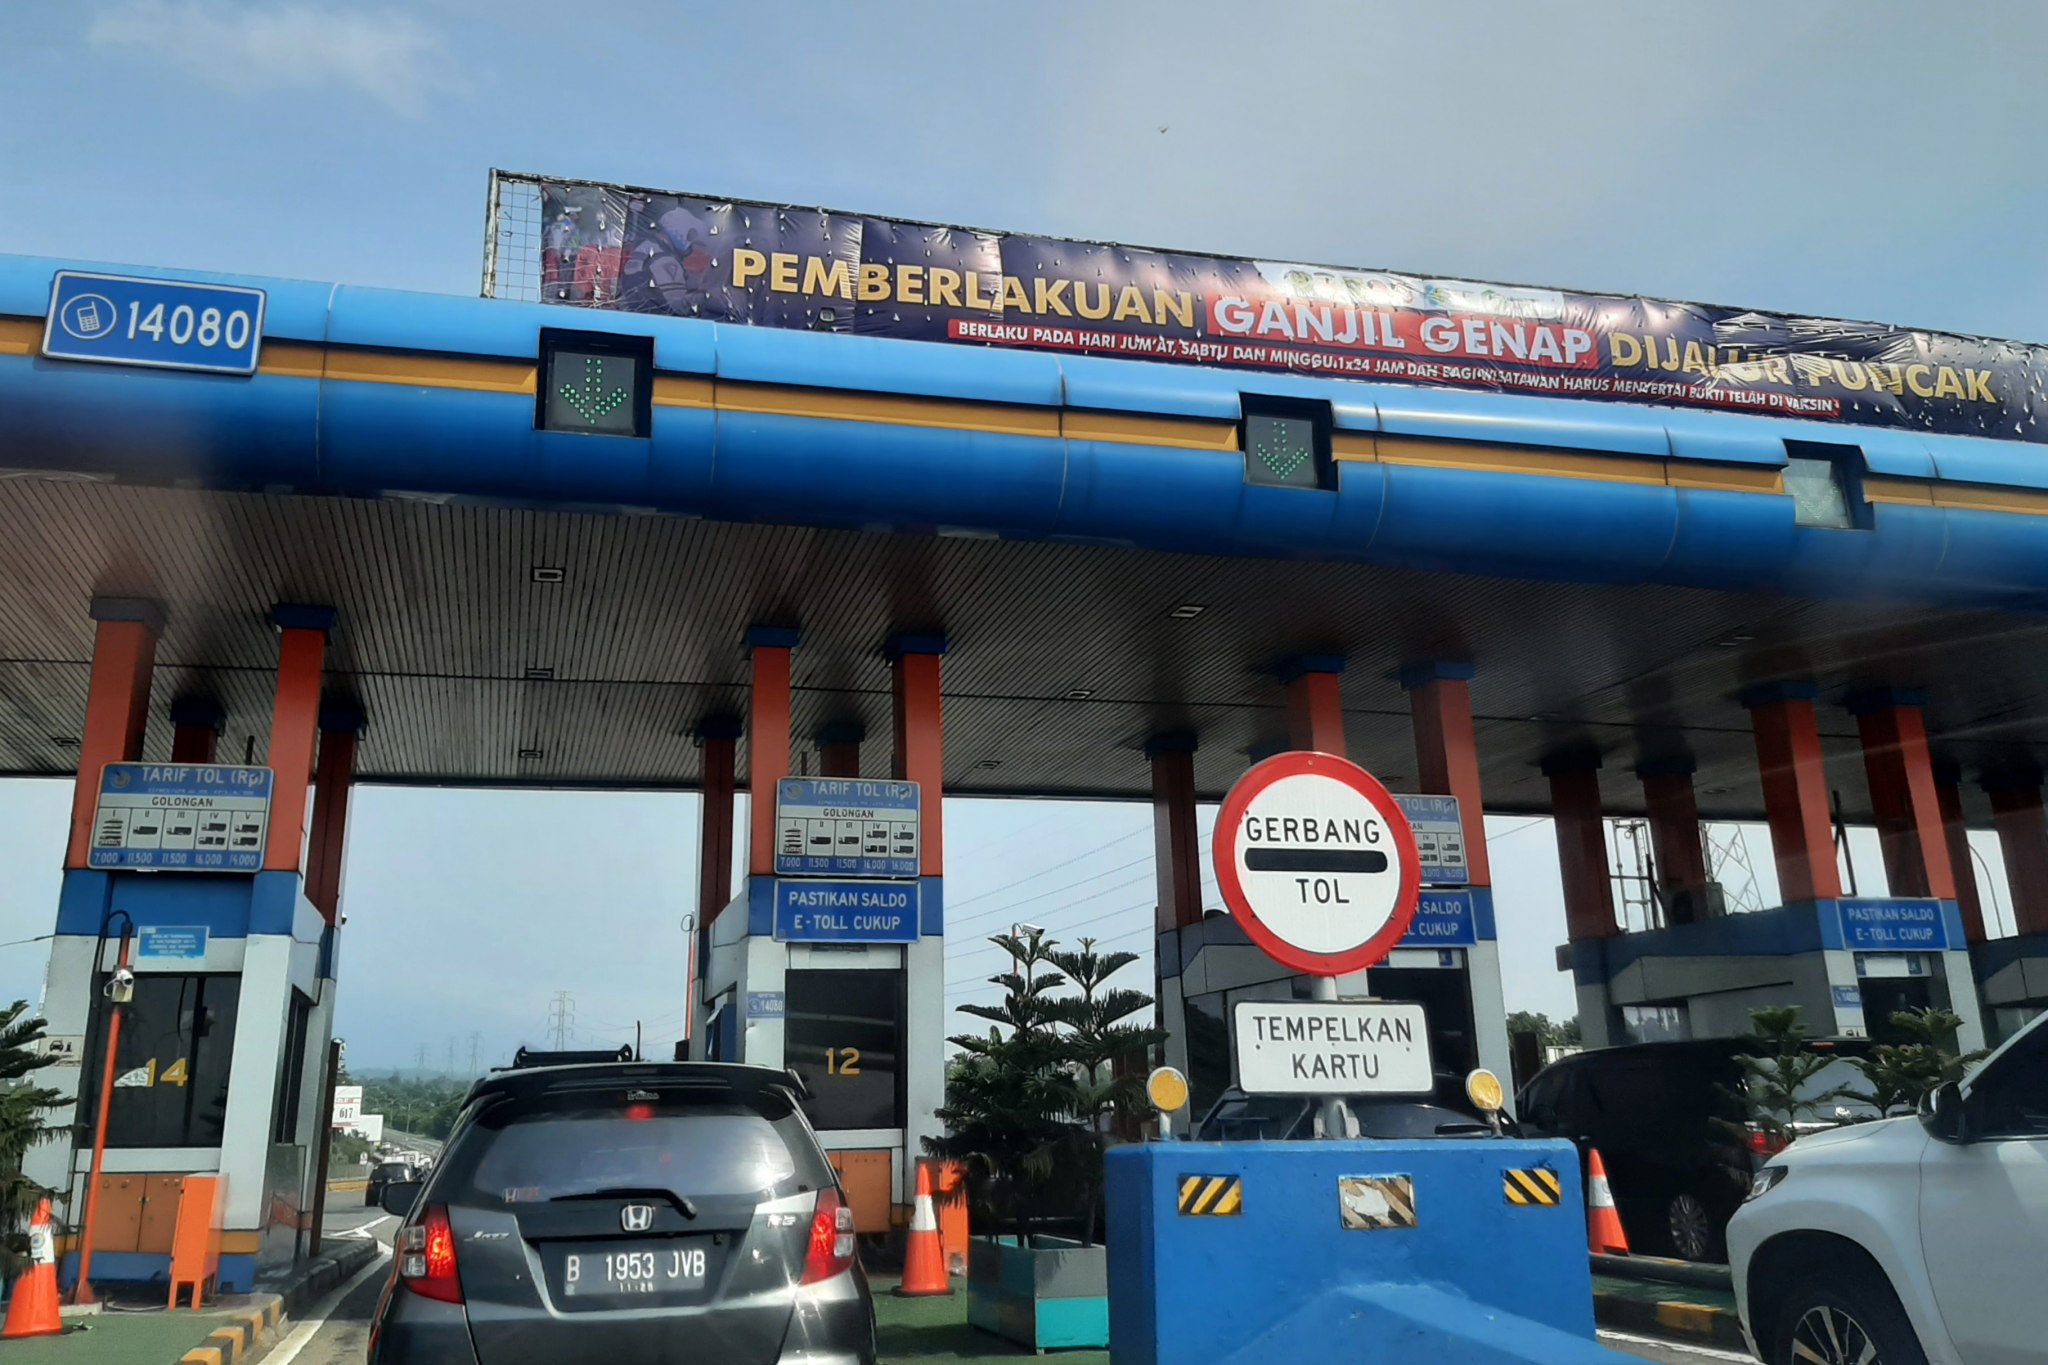 Spanduk pemberlakuan ganjil genap di jalur puncak terpasang diatas pintu tol Ciawi, Kabupaten Bogor, Jawa Barat, Jumat, 3 September 2021. Foto: Ismail Pohan/TrenAsia